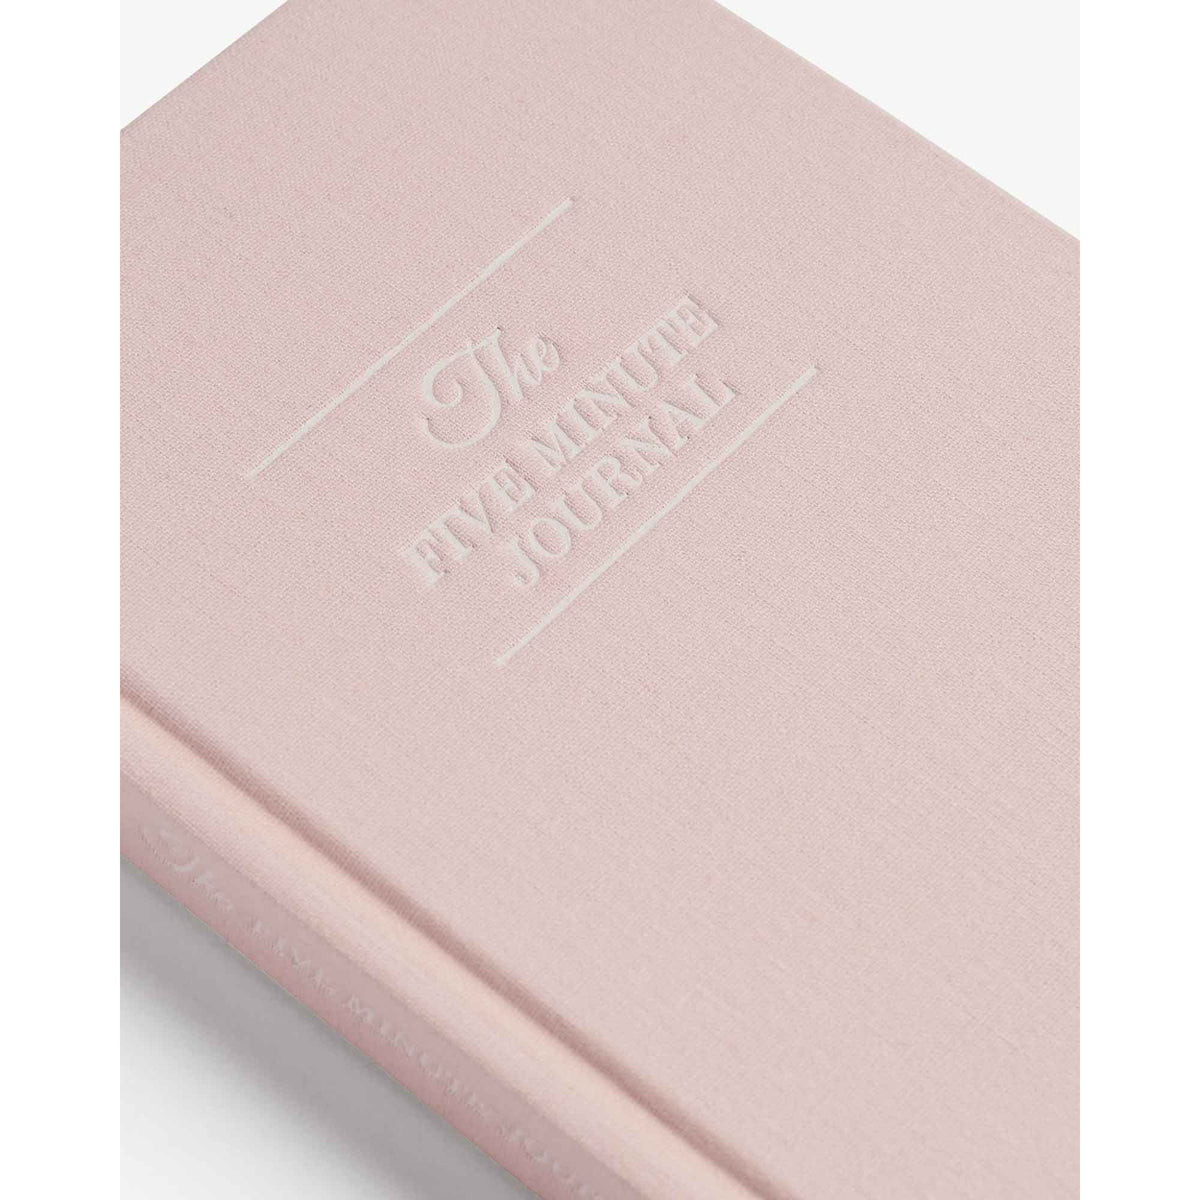 Grateful Workflow Daily Bundle - Blush Pink by Intelligent Change